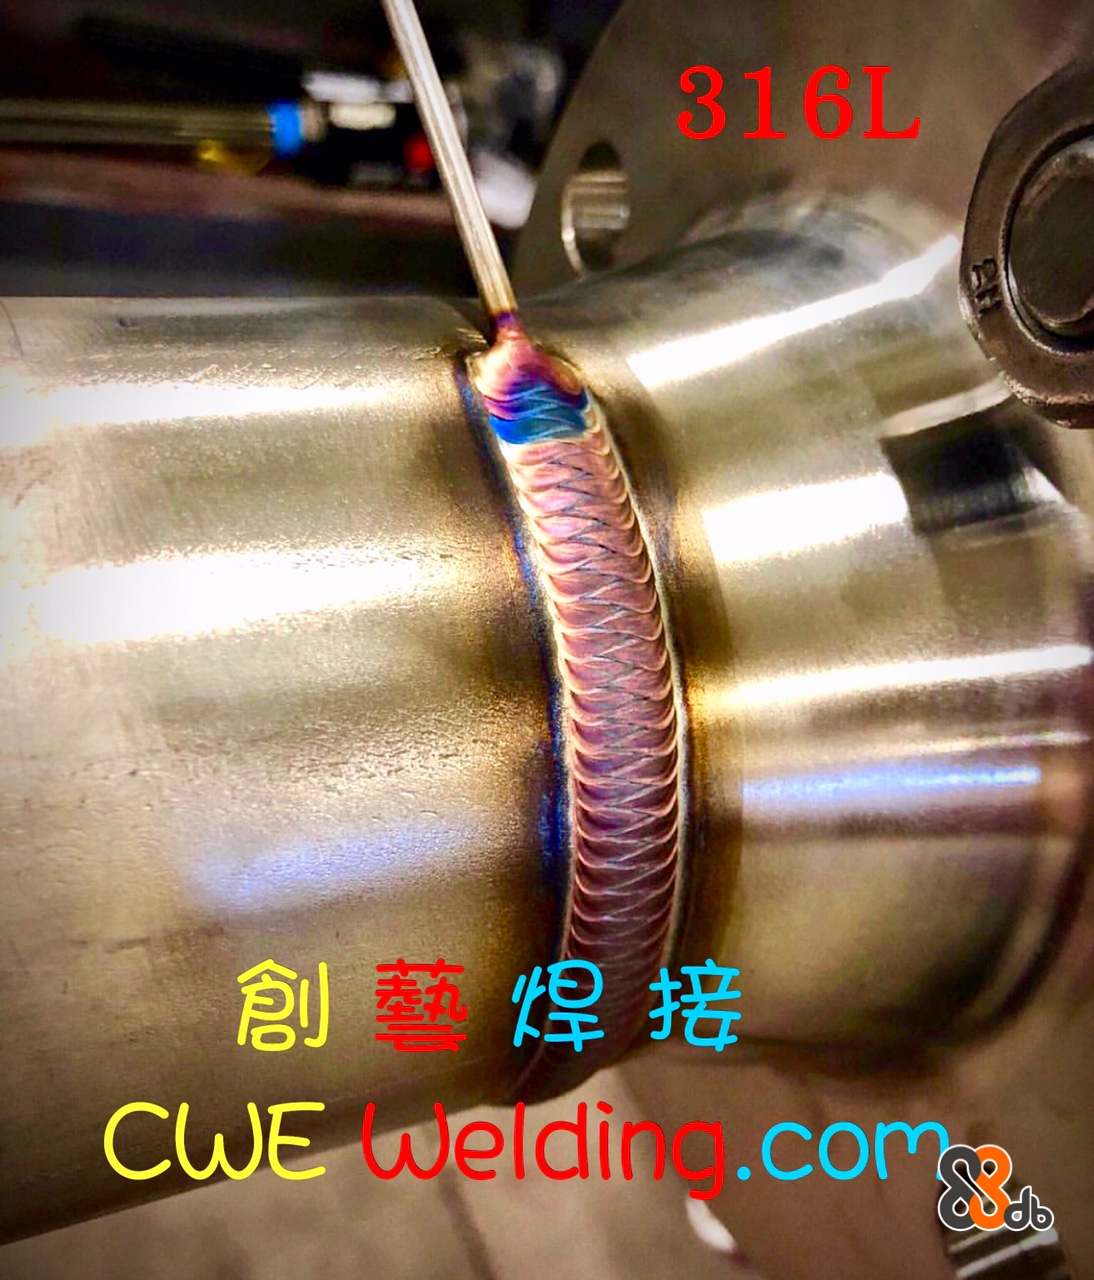 316L 創 焊接 CWE Welding.com  metal